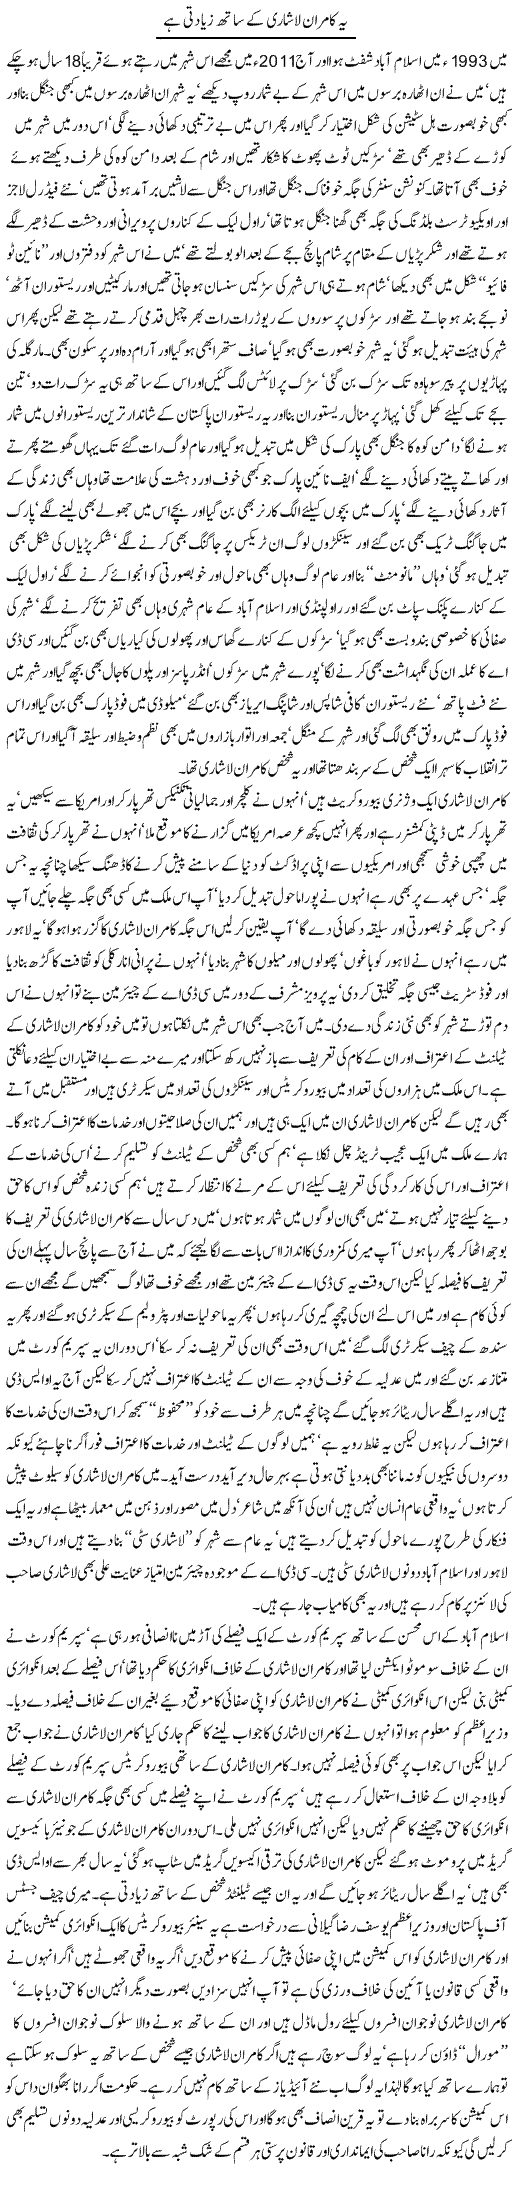 City of Islamabad Express Column Javed Chaudhry 29 April 2011